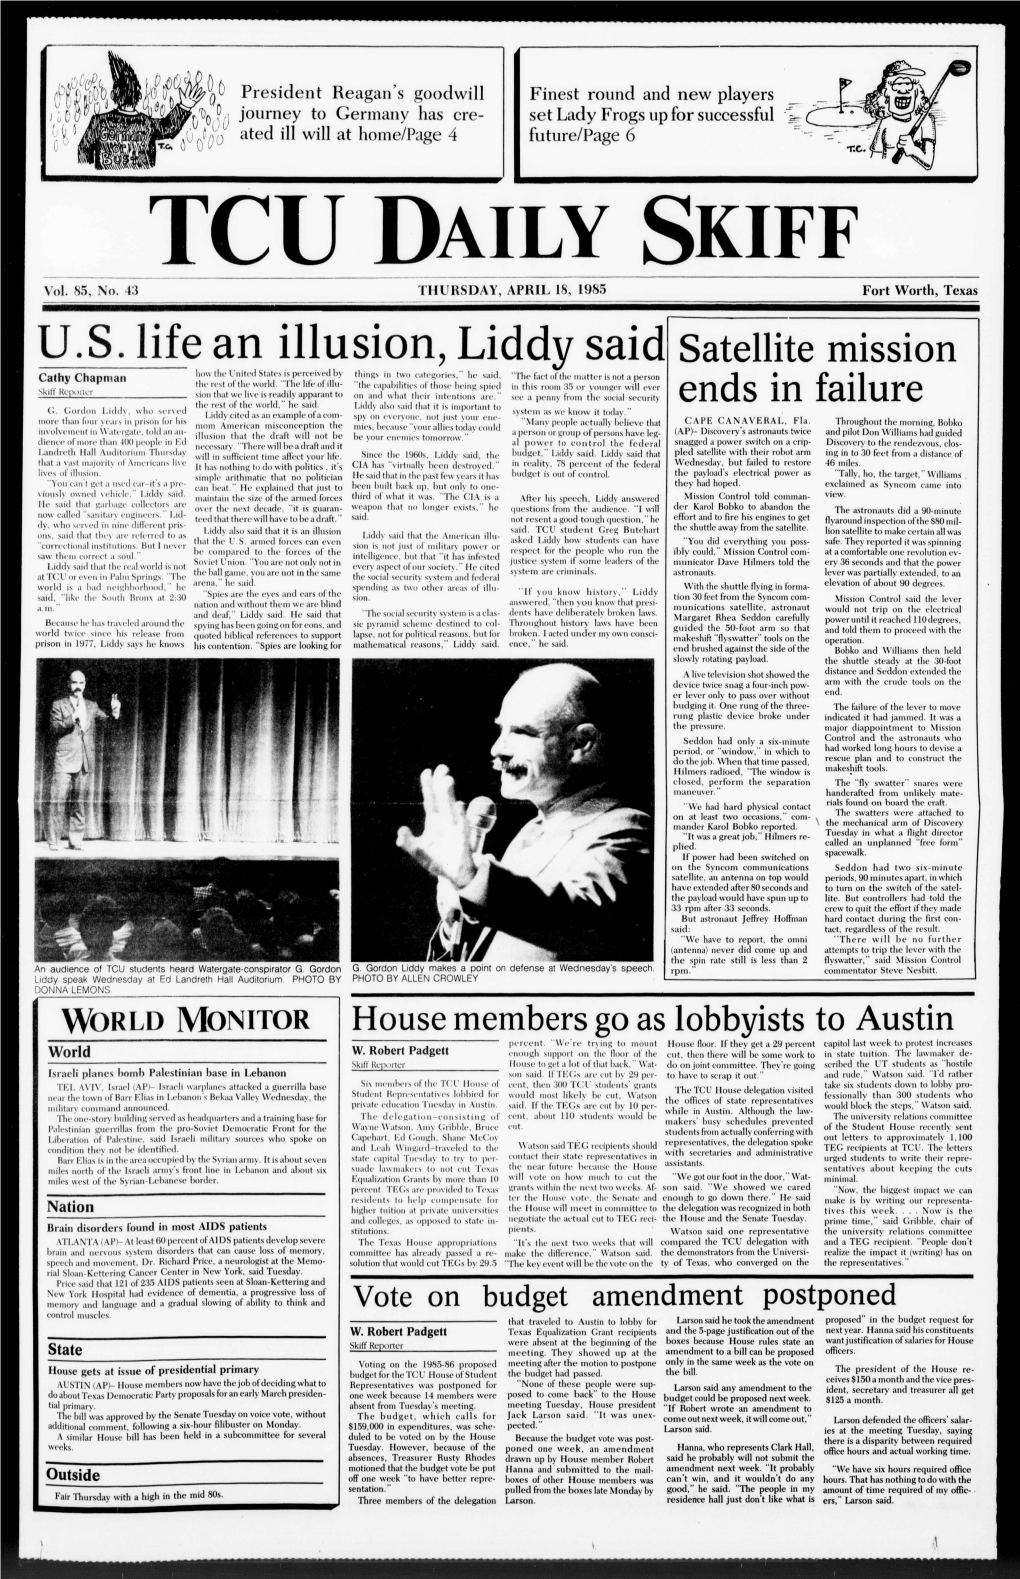 U.S. Life an Illusion, Liddy Said